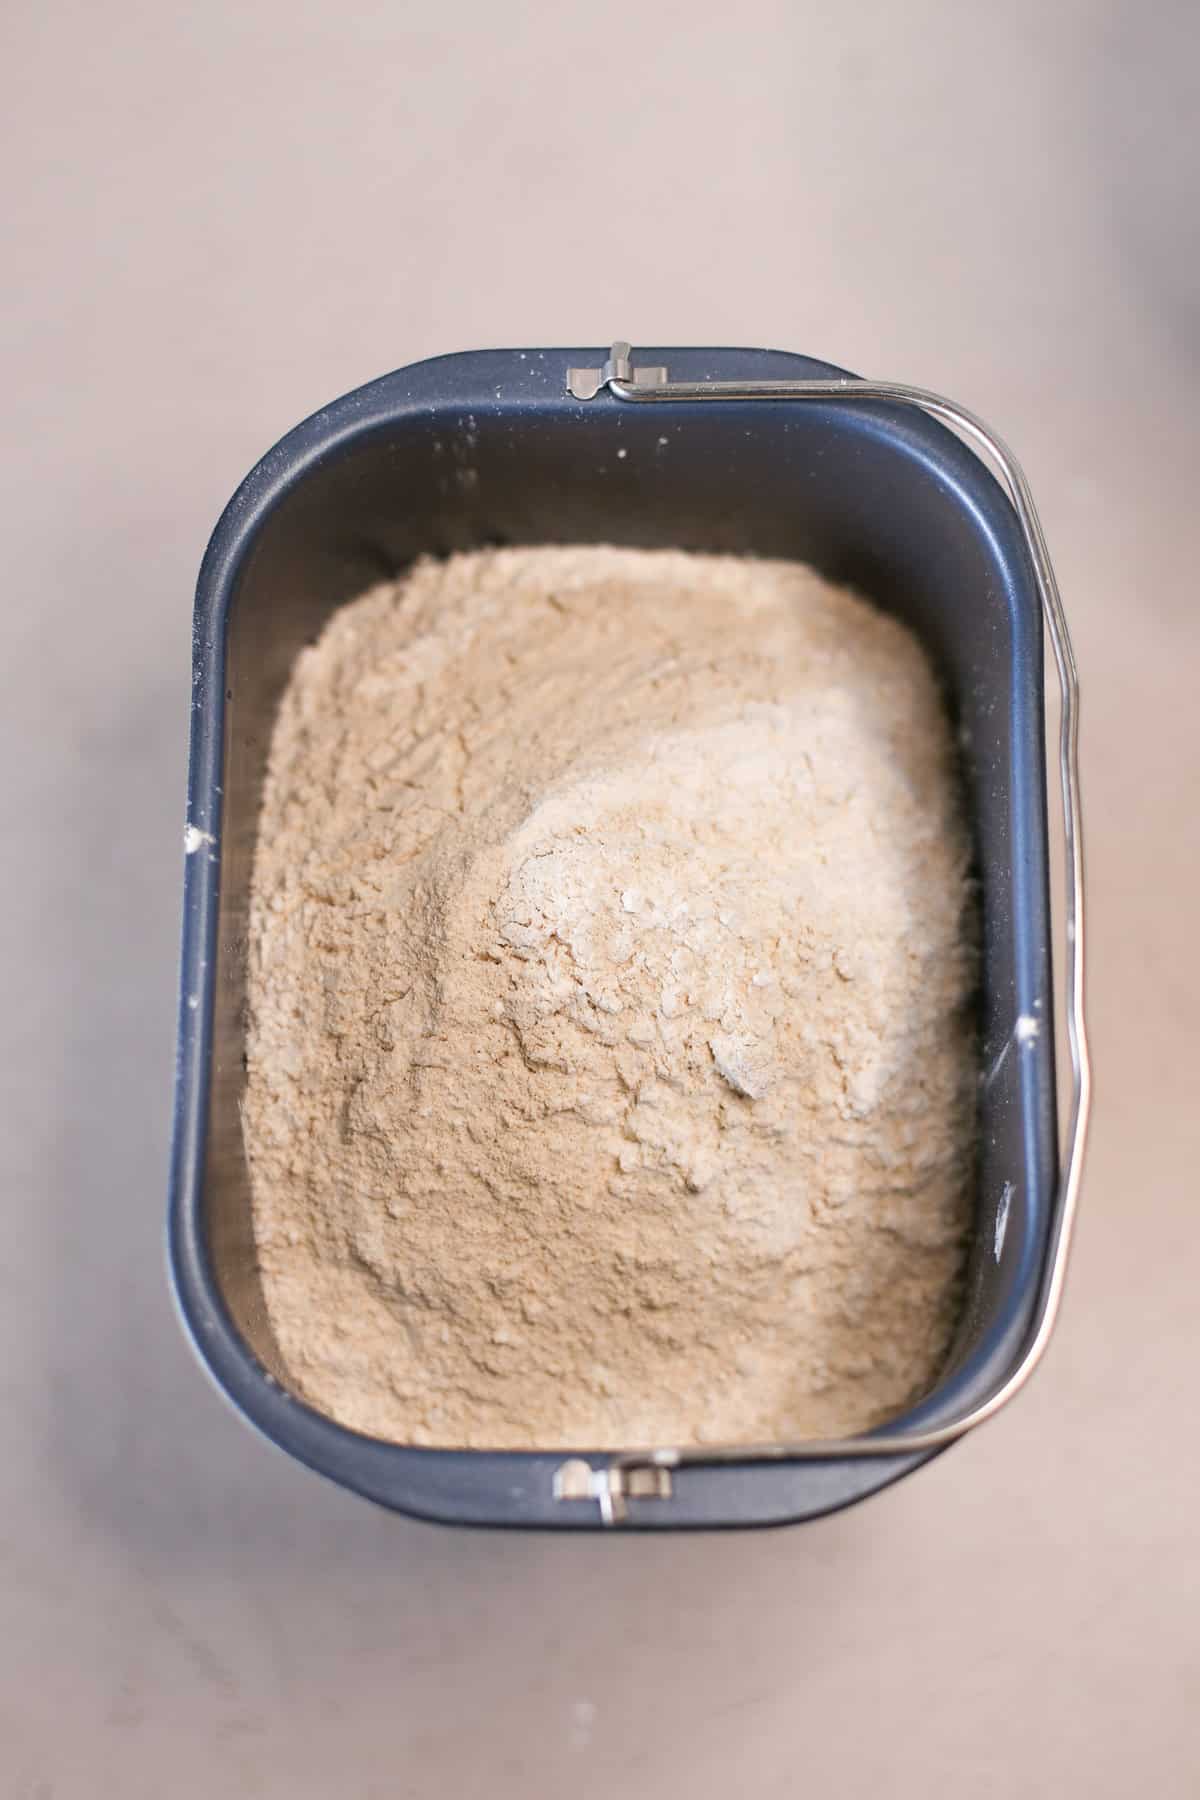 Dry ingredients in bread machine insert.